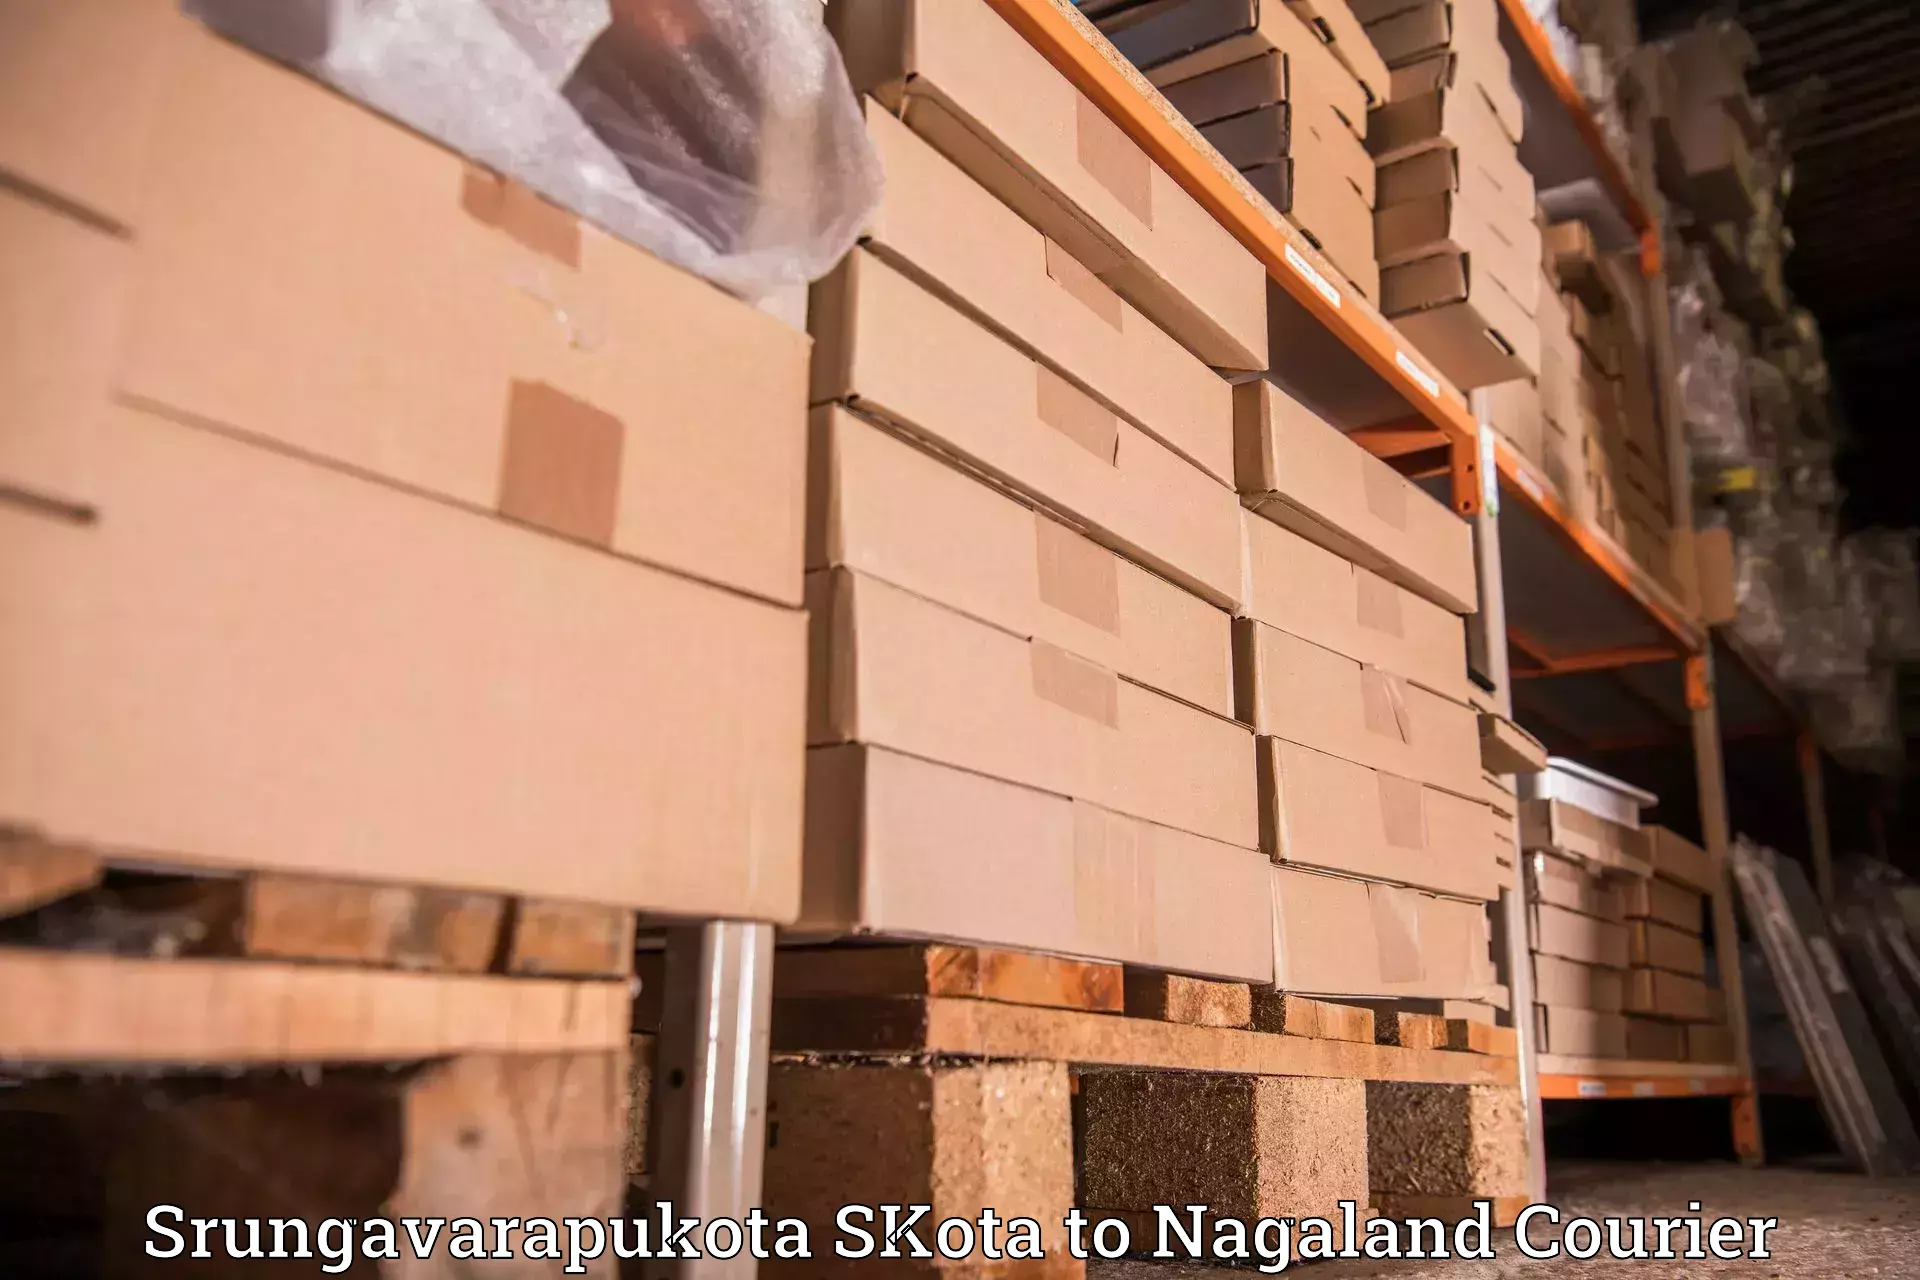 Courier service partnerships Srungavarapukota SKota to Nagaland